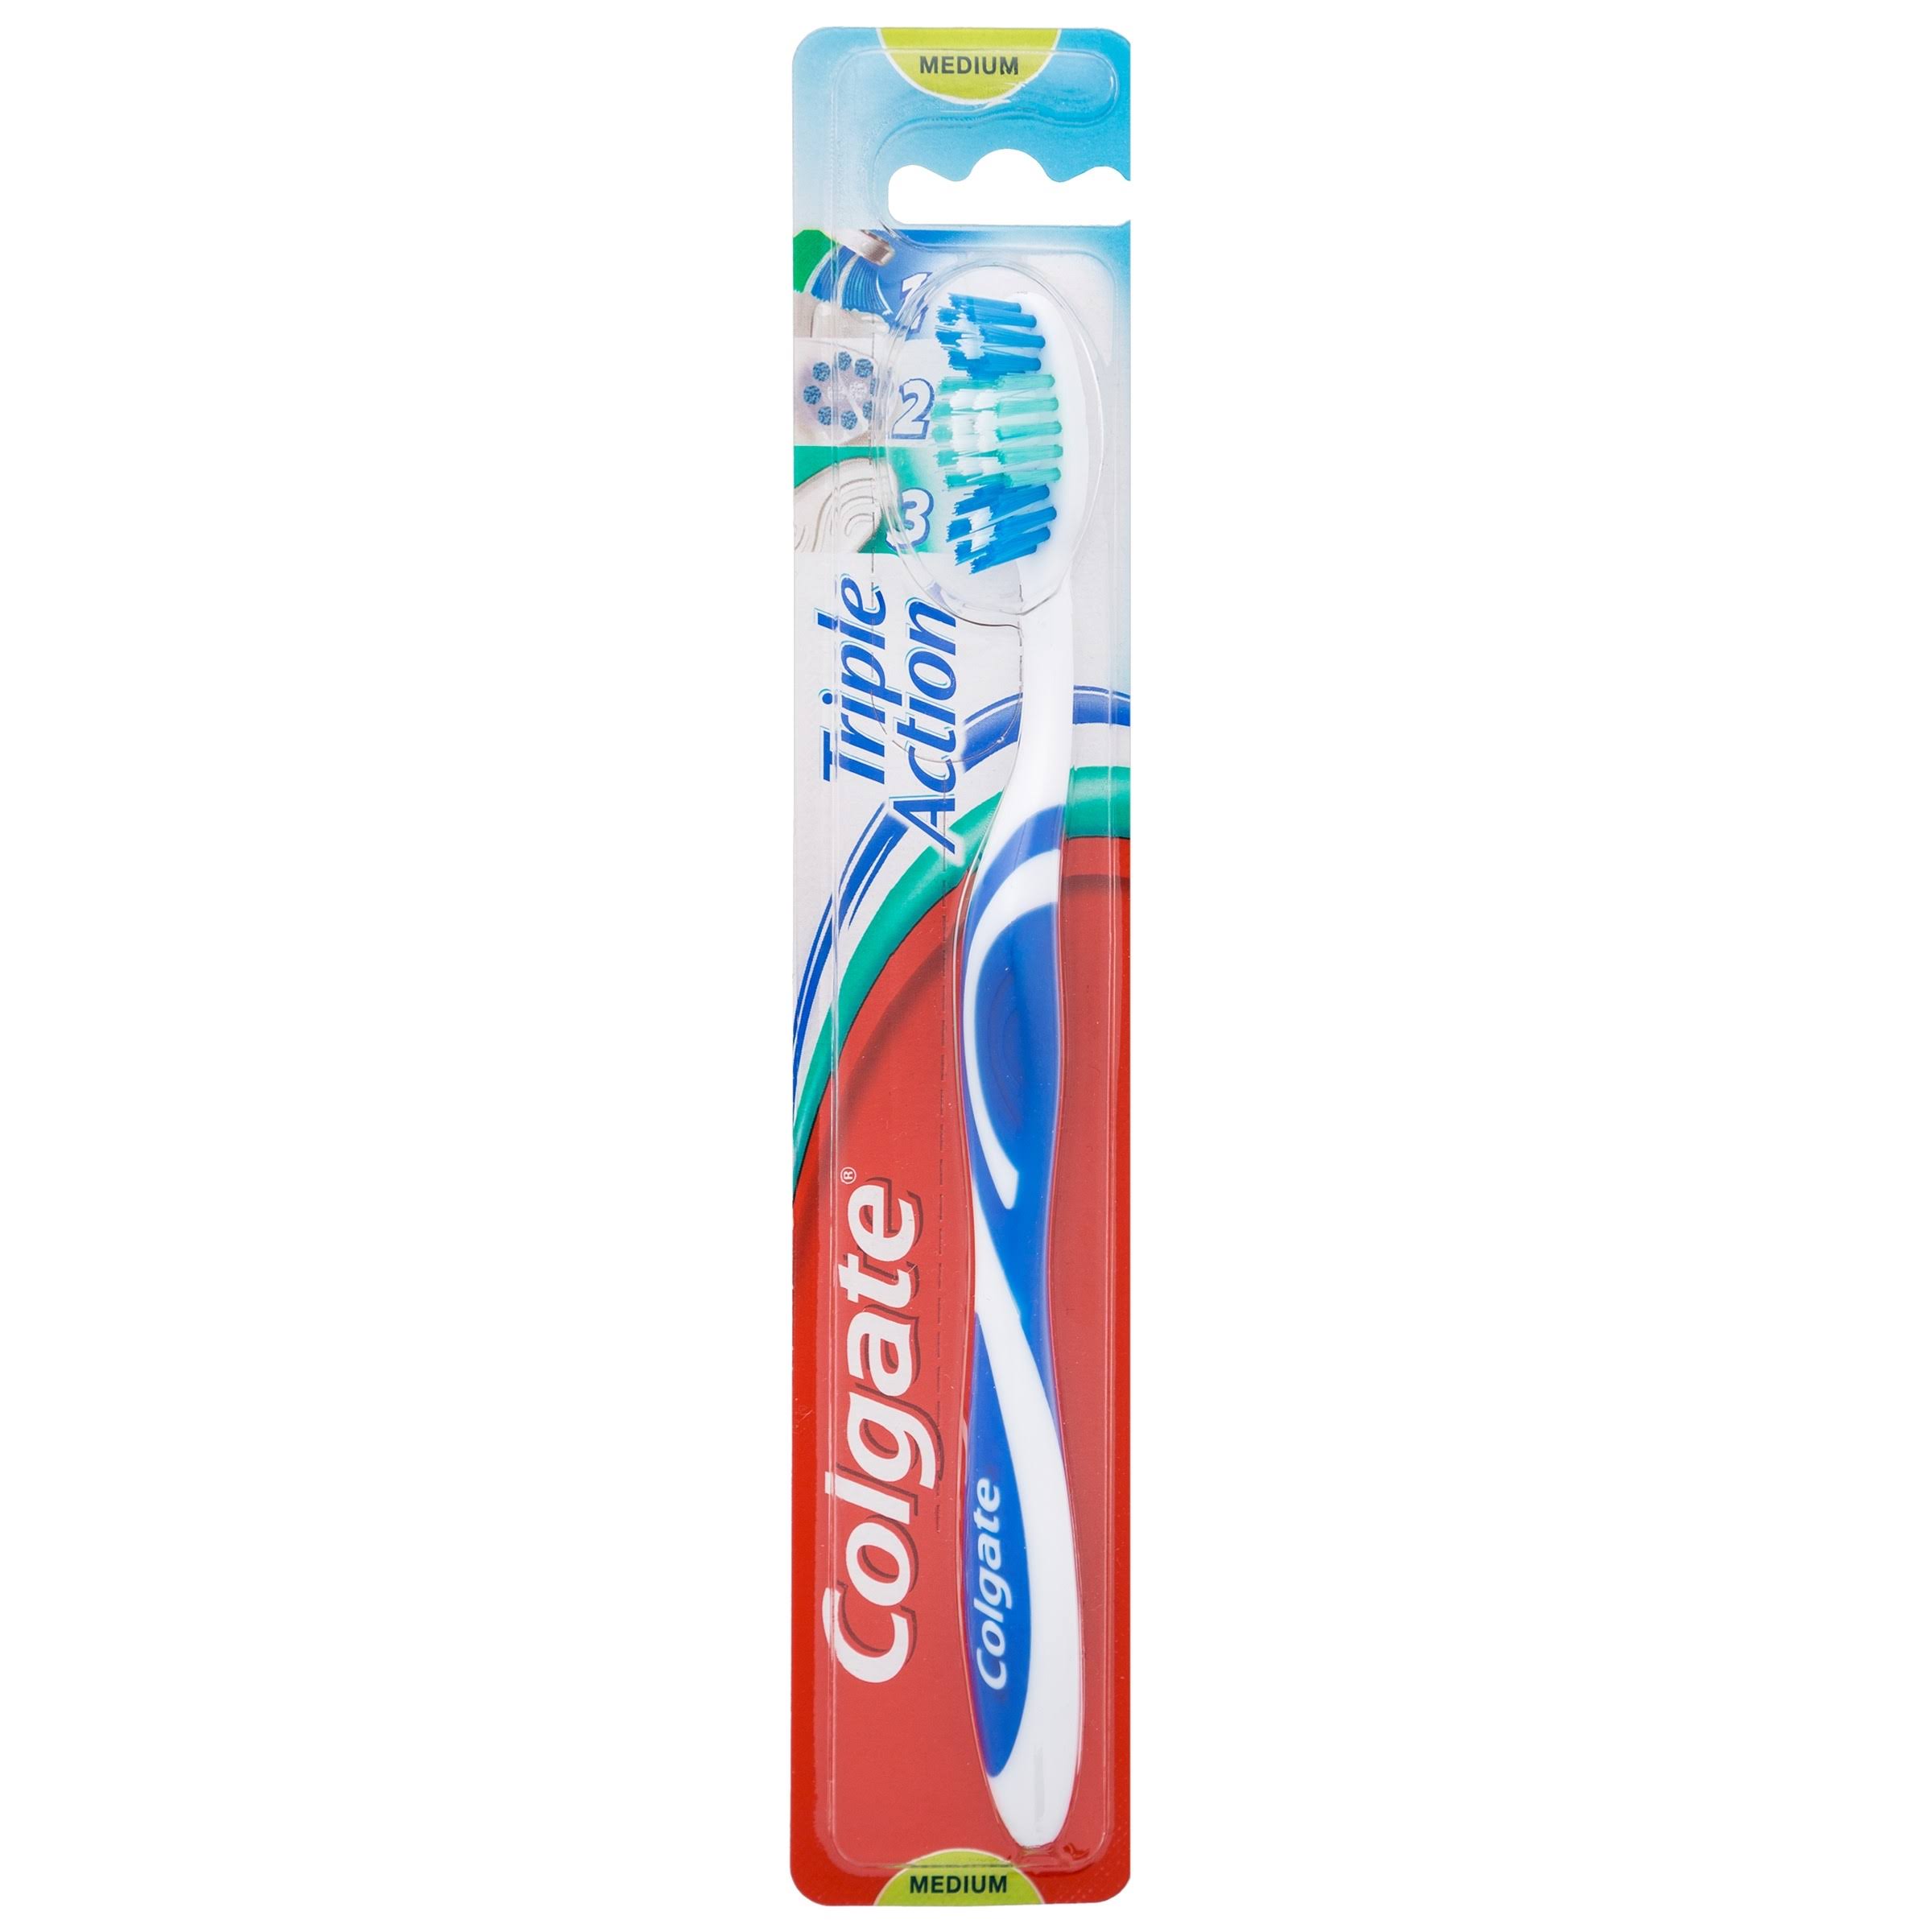 Colgate Triple Action Toothbrush